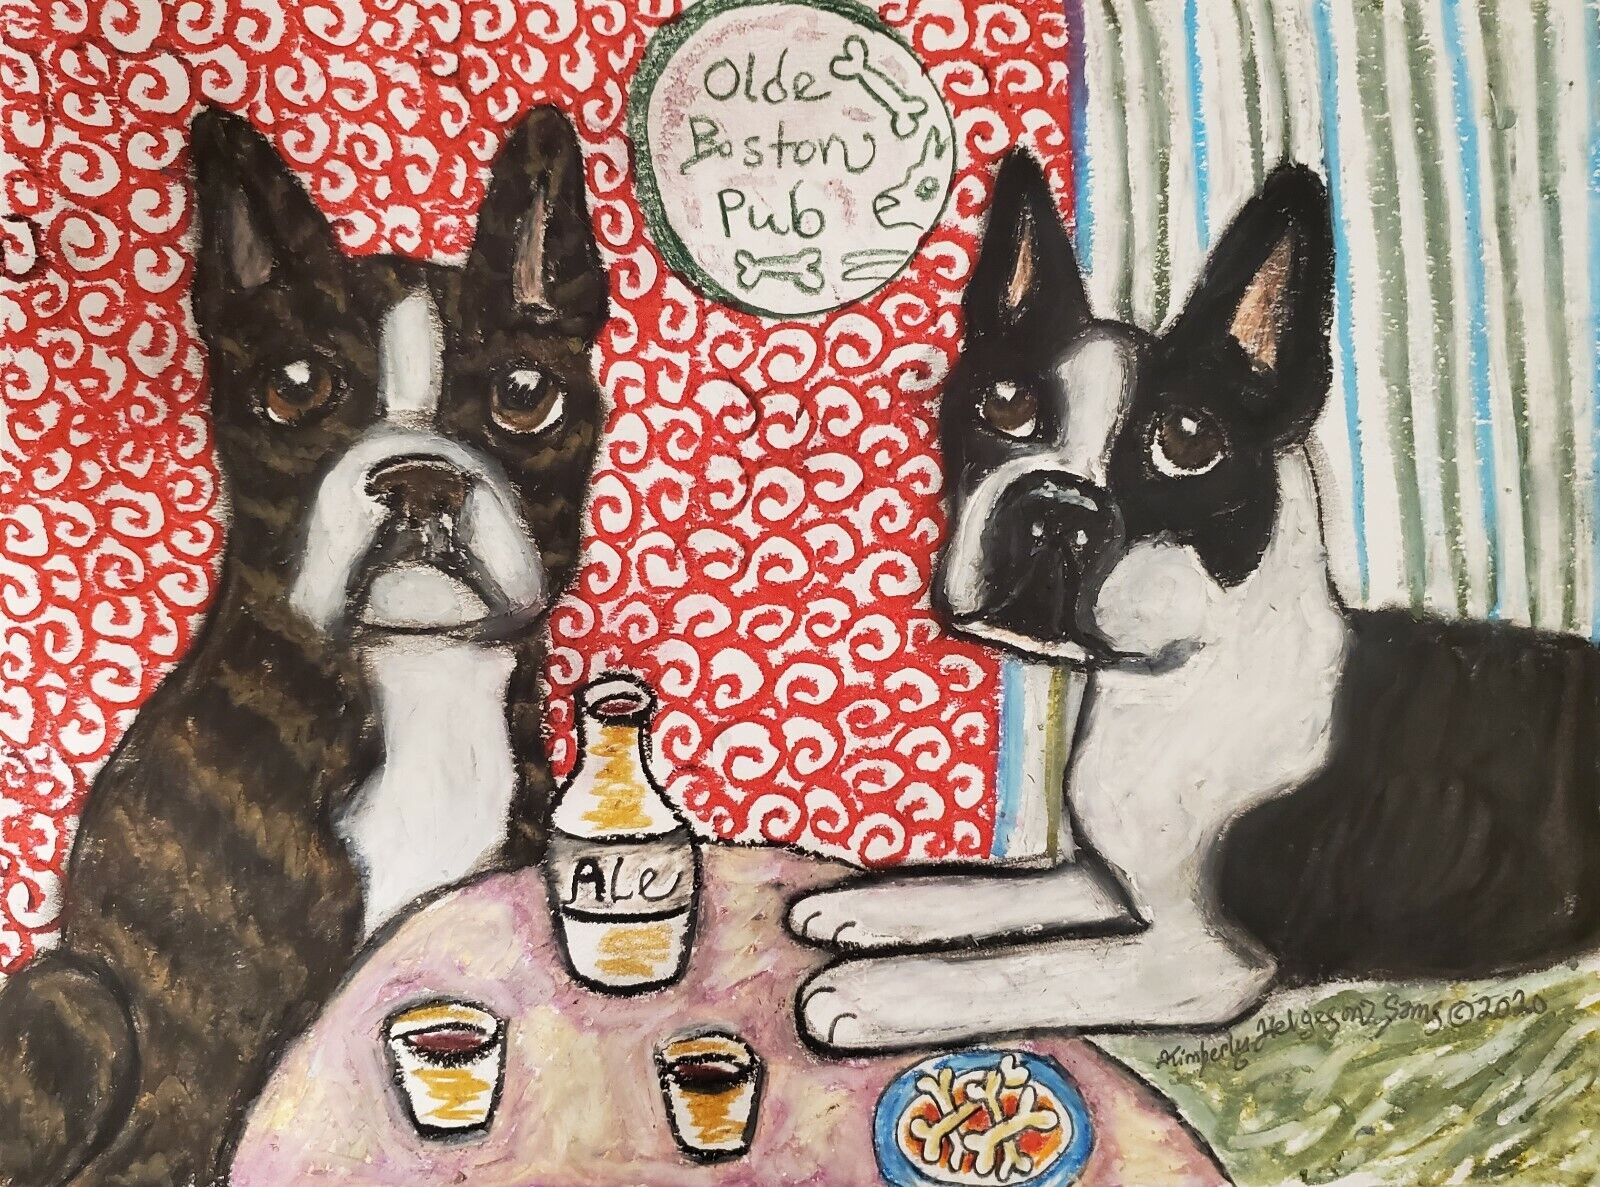 Boston Terrier Collectible Pub Dog Vintage Style Art Print 4x6 by Artist KSams